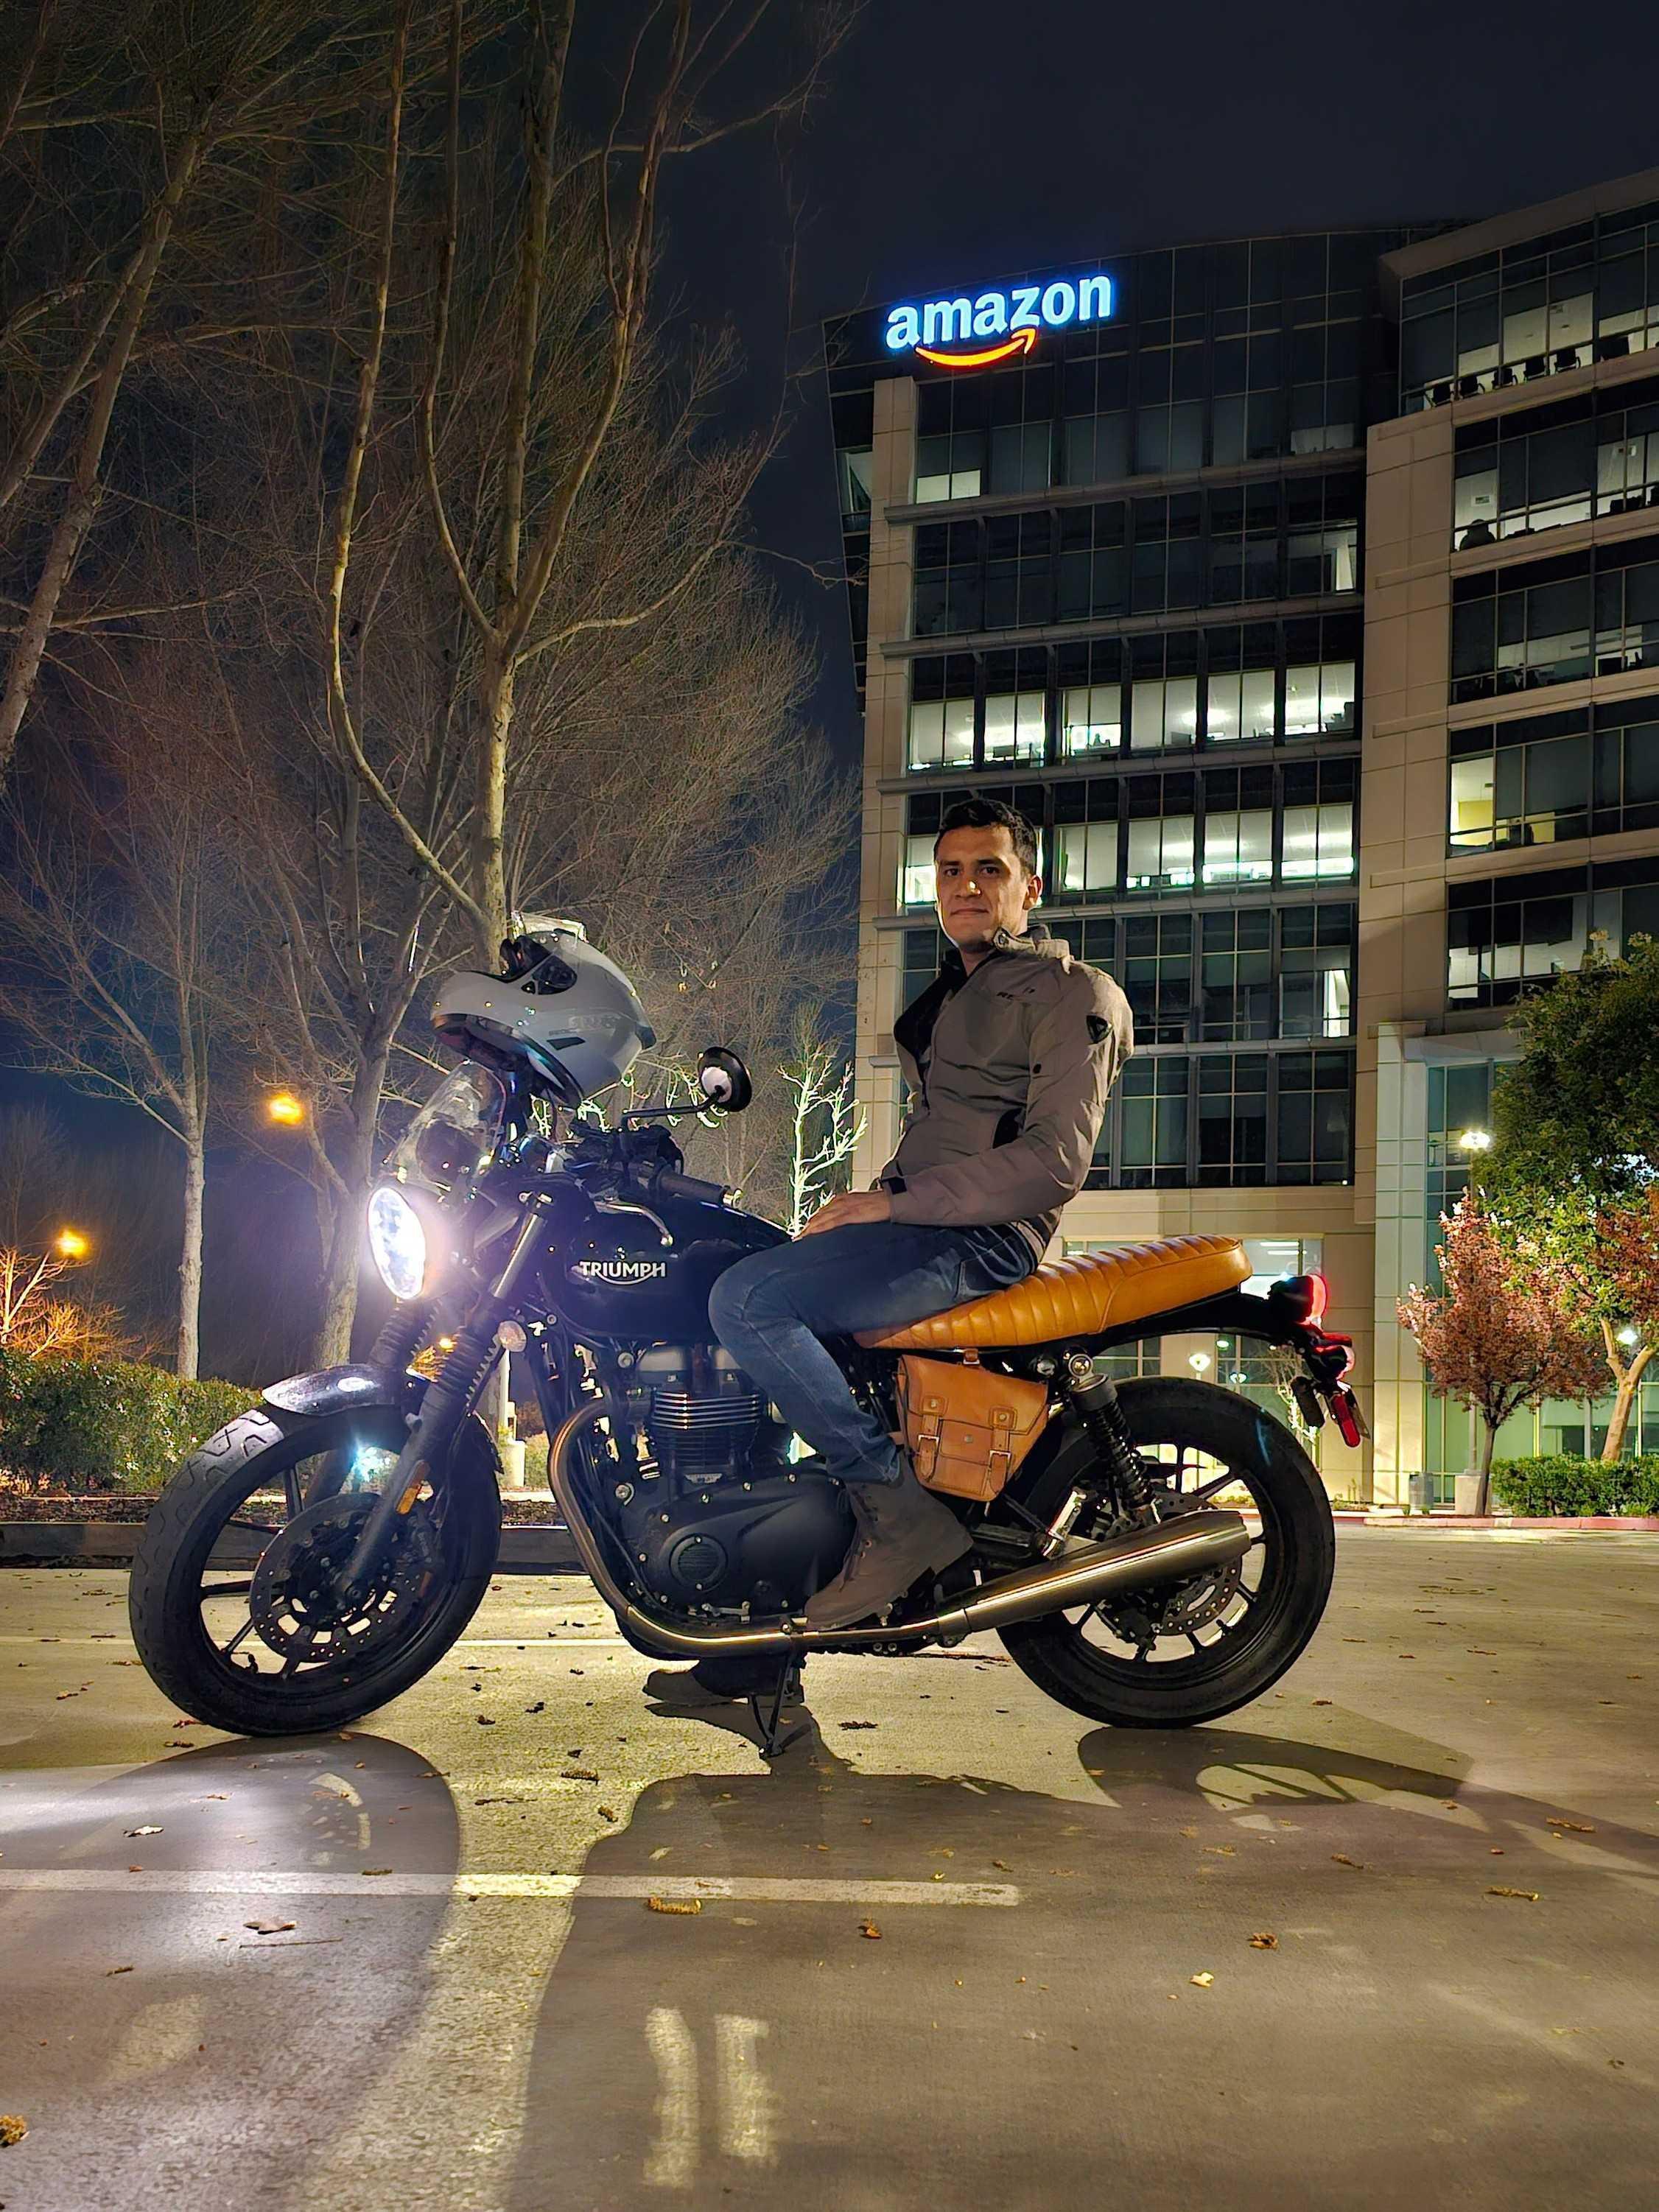 Motorcycle with Amazon building.jpg